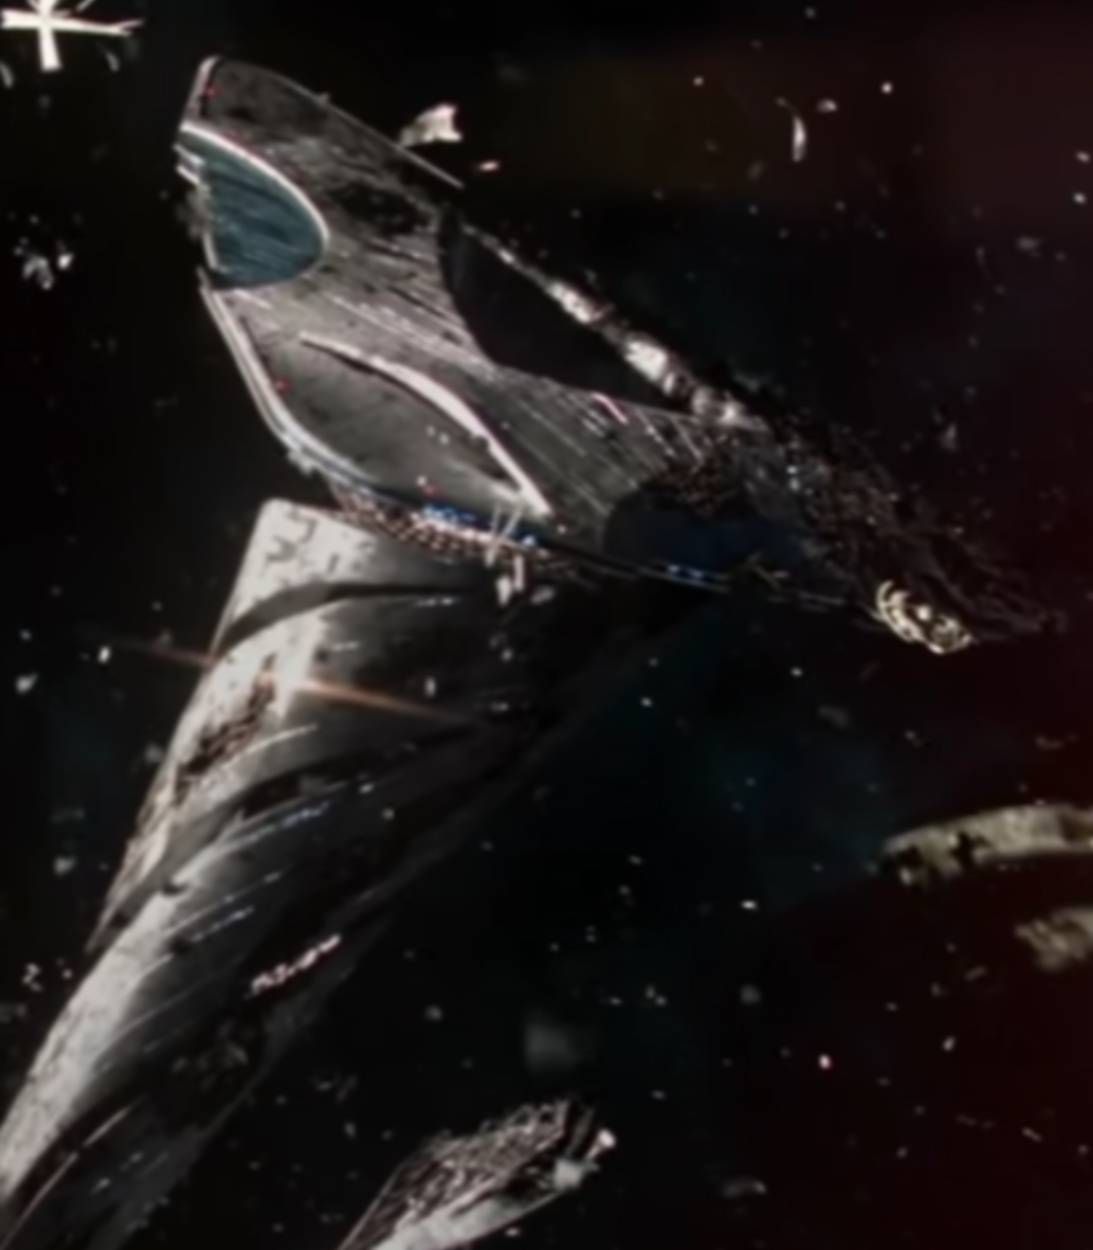 Star Trek Discovery season 3 wrecked ships pic vertical